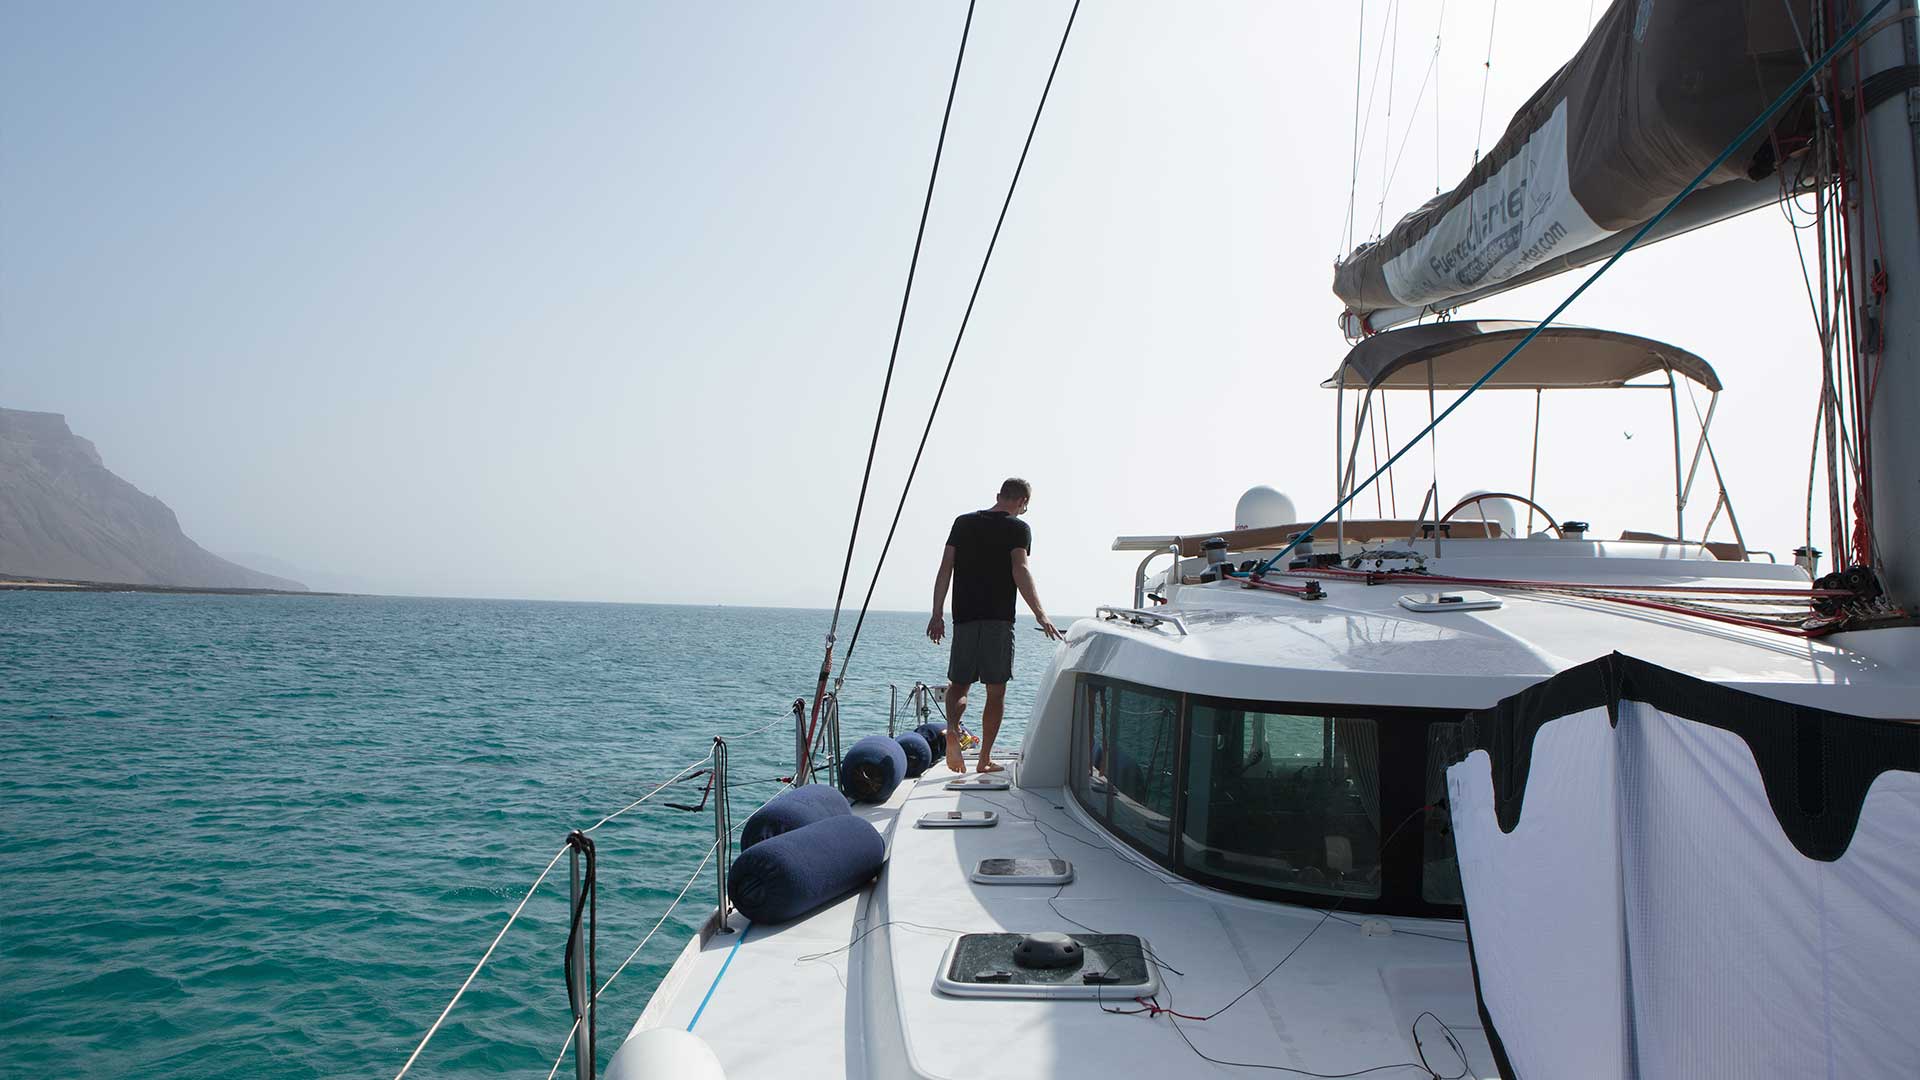 Kite surfari trip around the Canary Islands on yacht charter